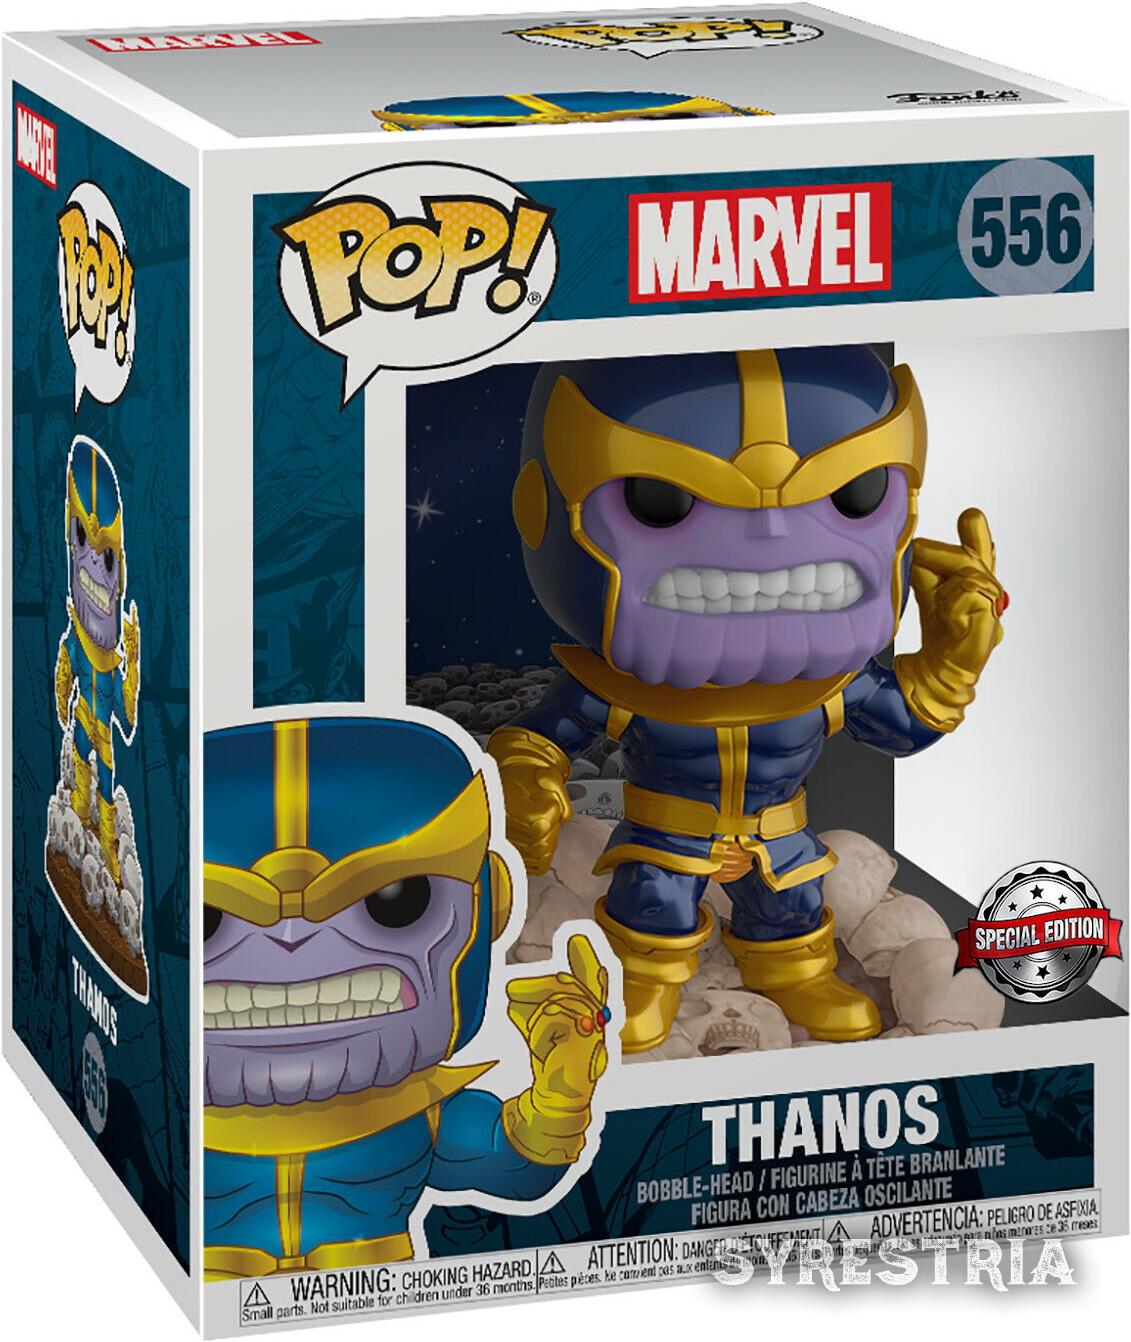 Marvel - Thanos 556 Special Edition - Funko Pop! - Vinyl Figur